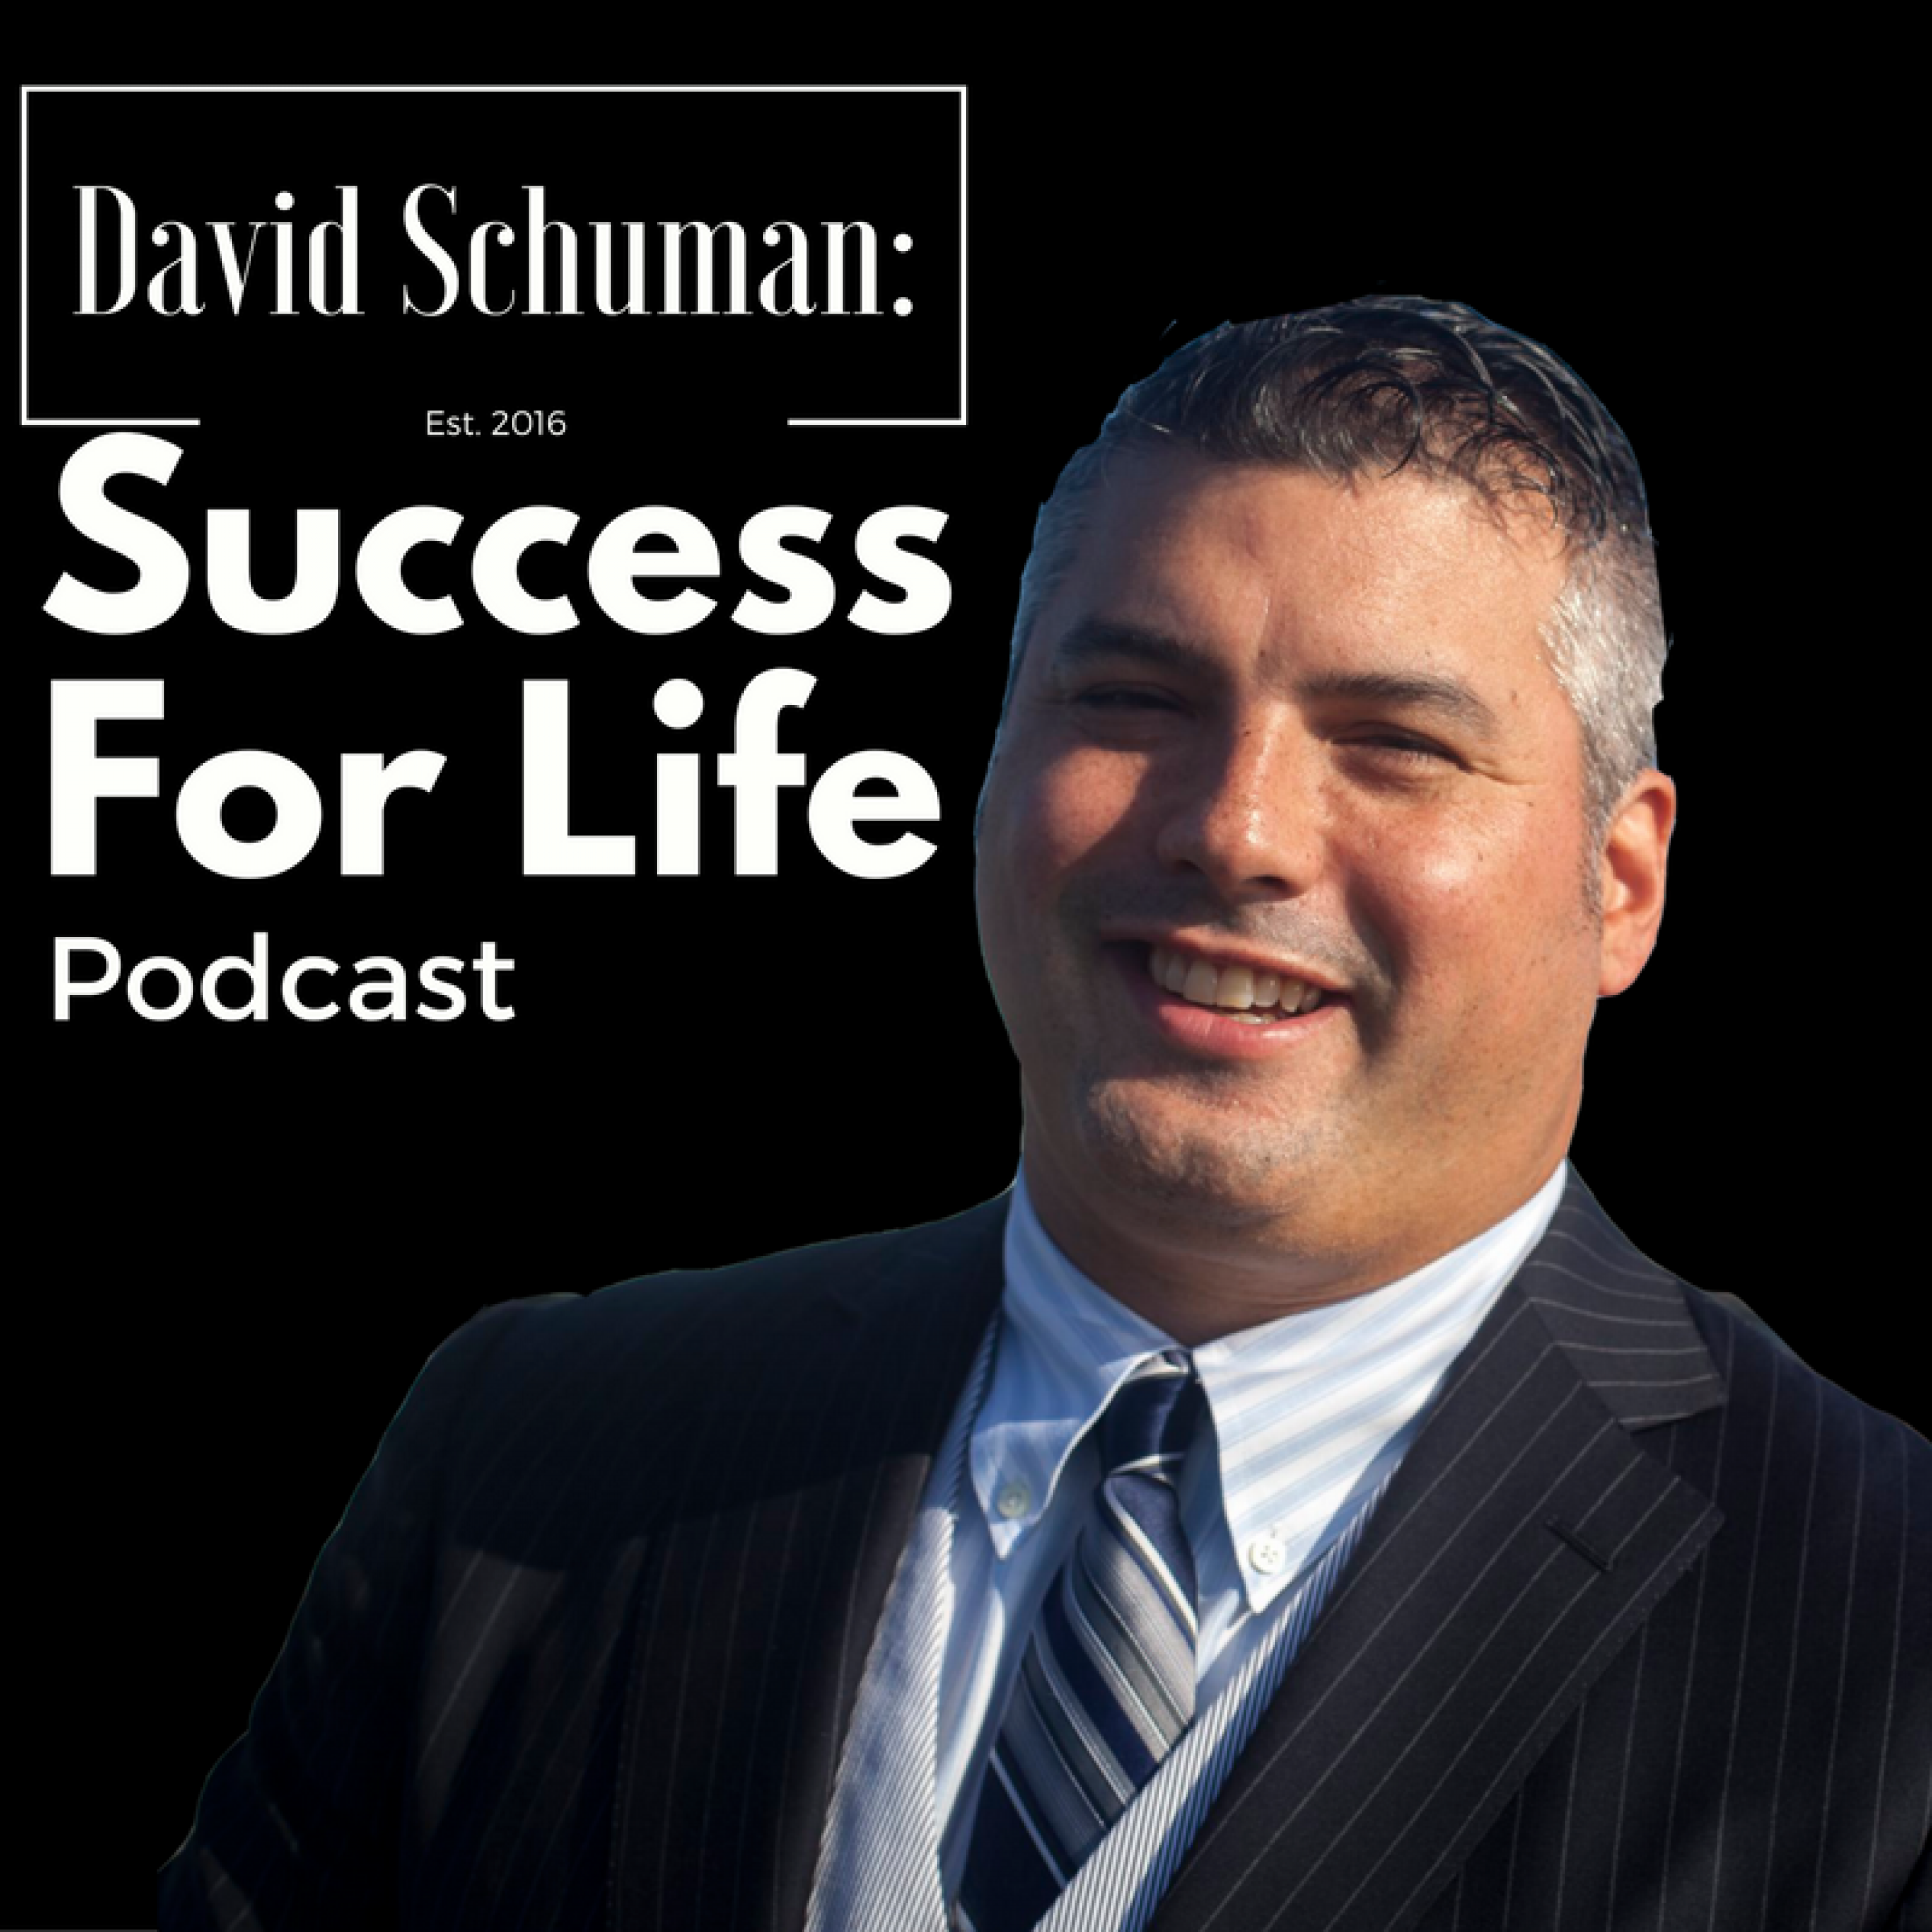 David Schuman: Success For Life Podcast